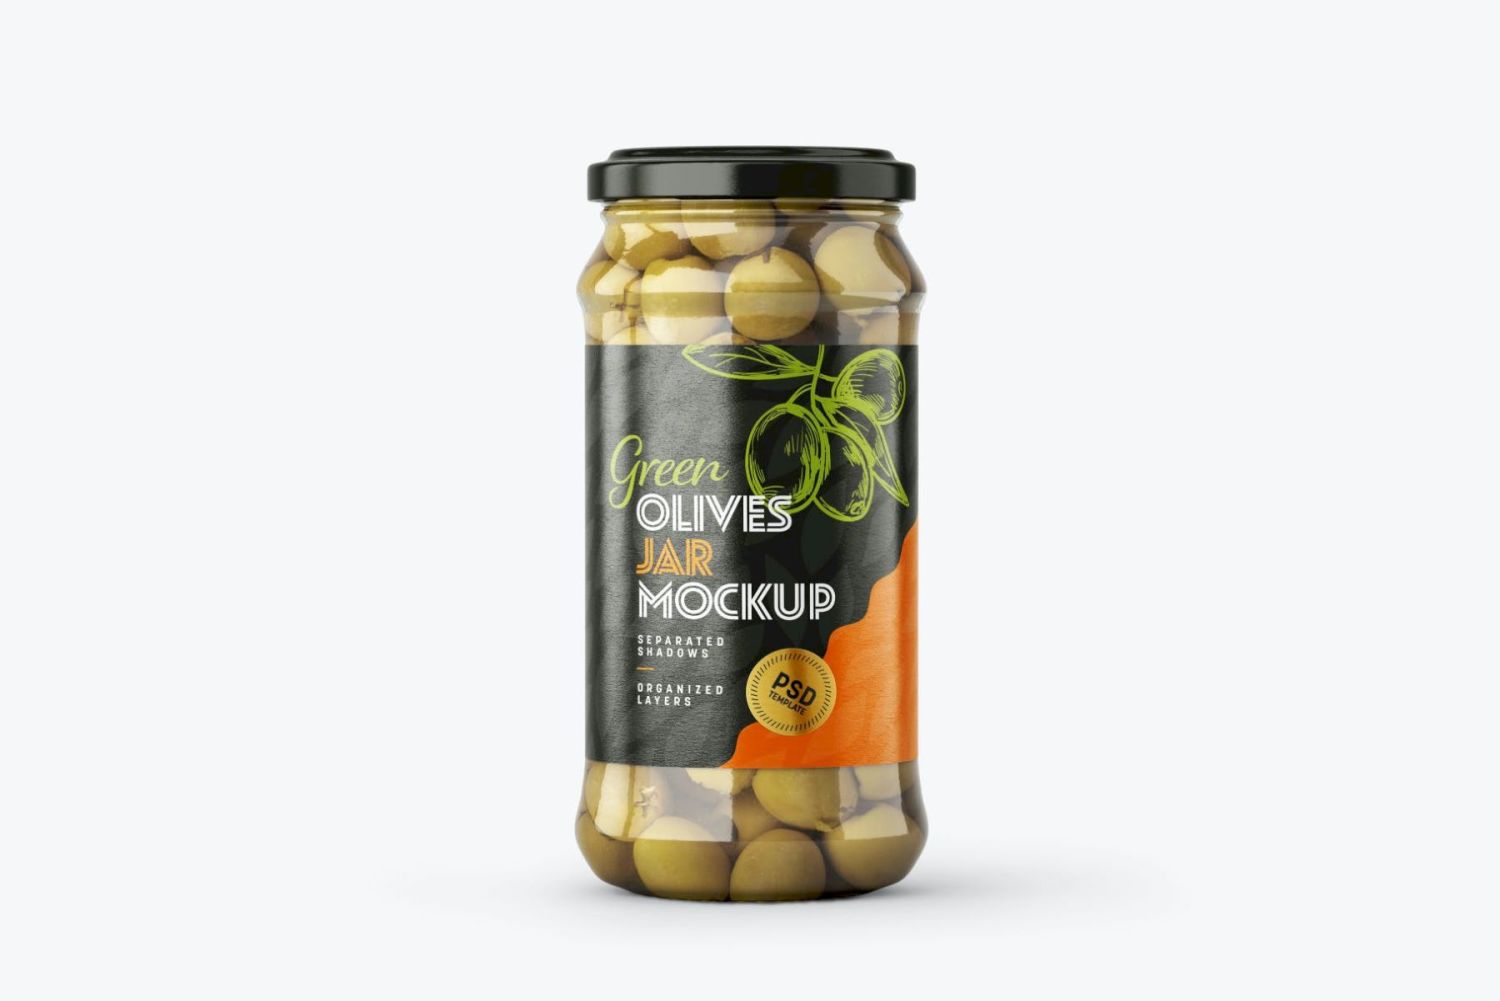 橄榄罐样机套装 Olives Jar Mockup Set插图5